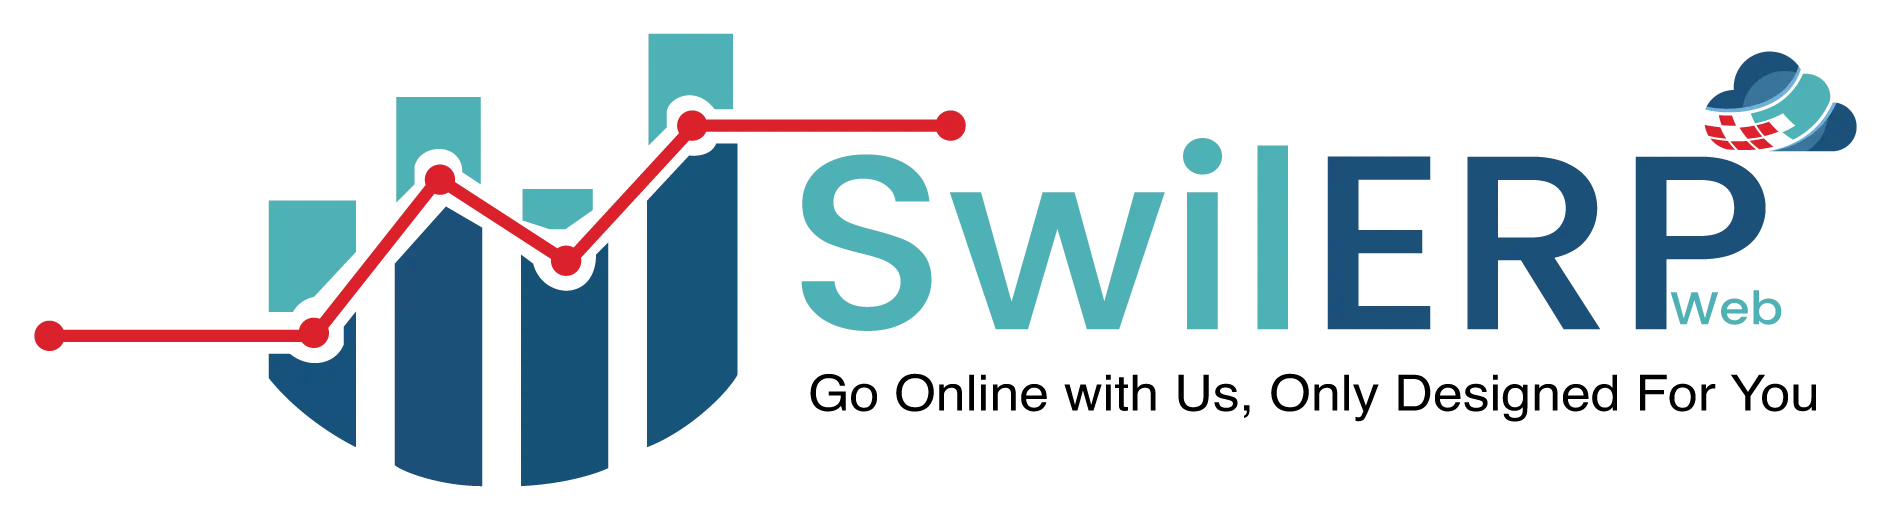 SwilERP logo.